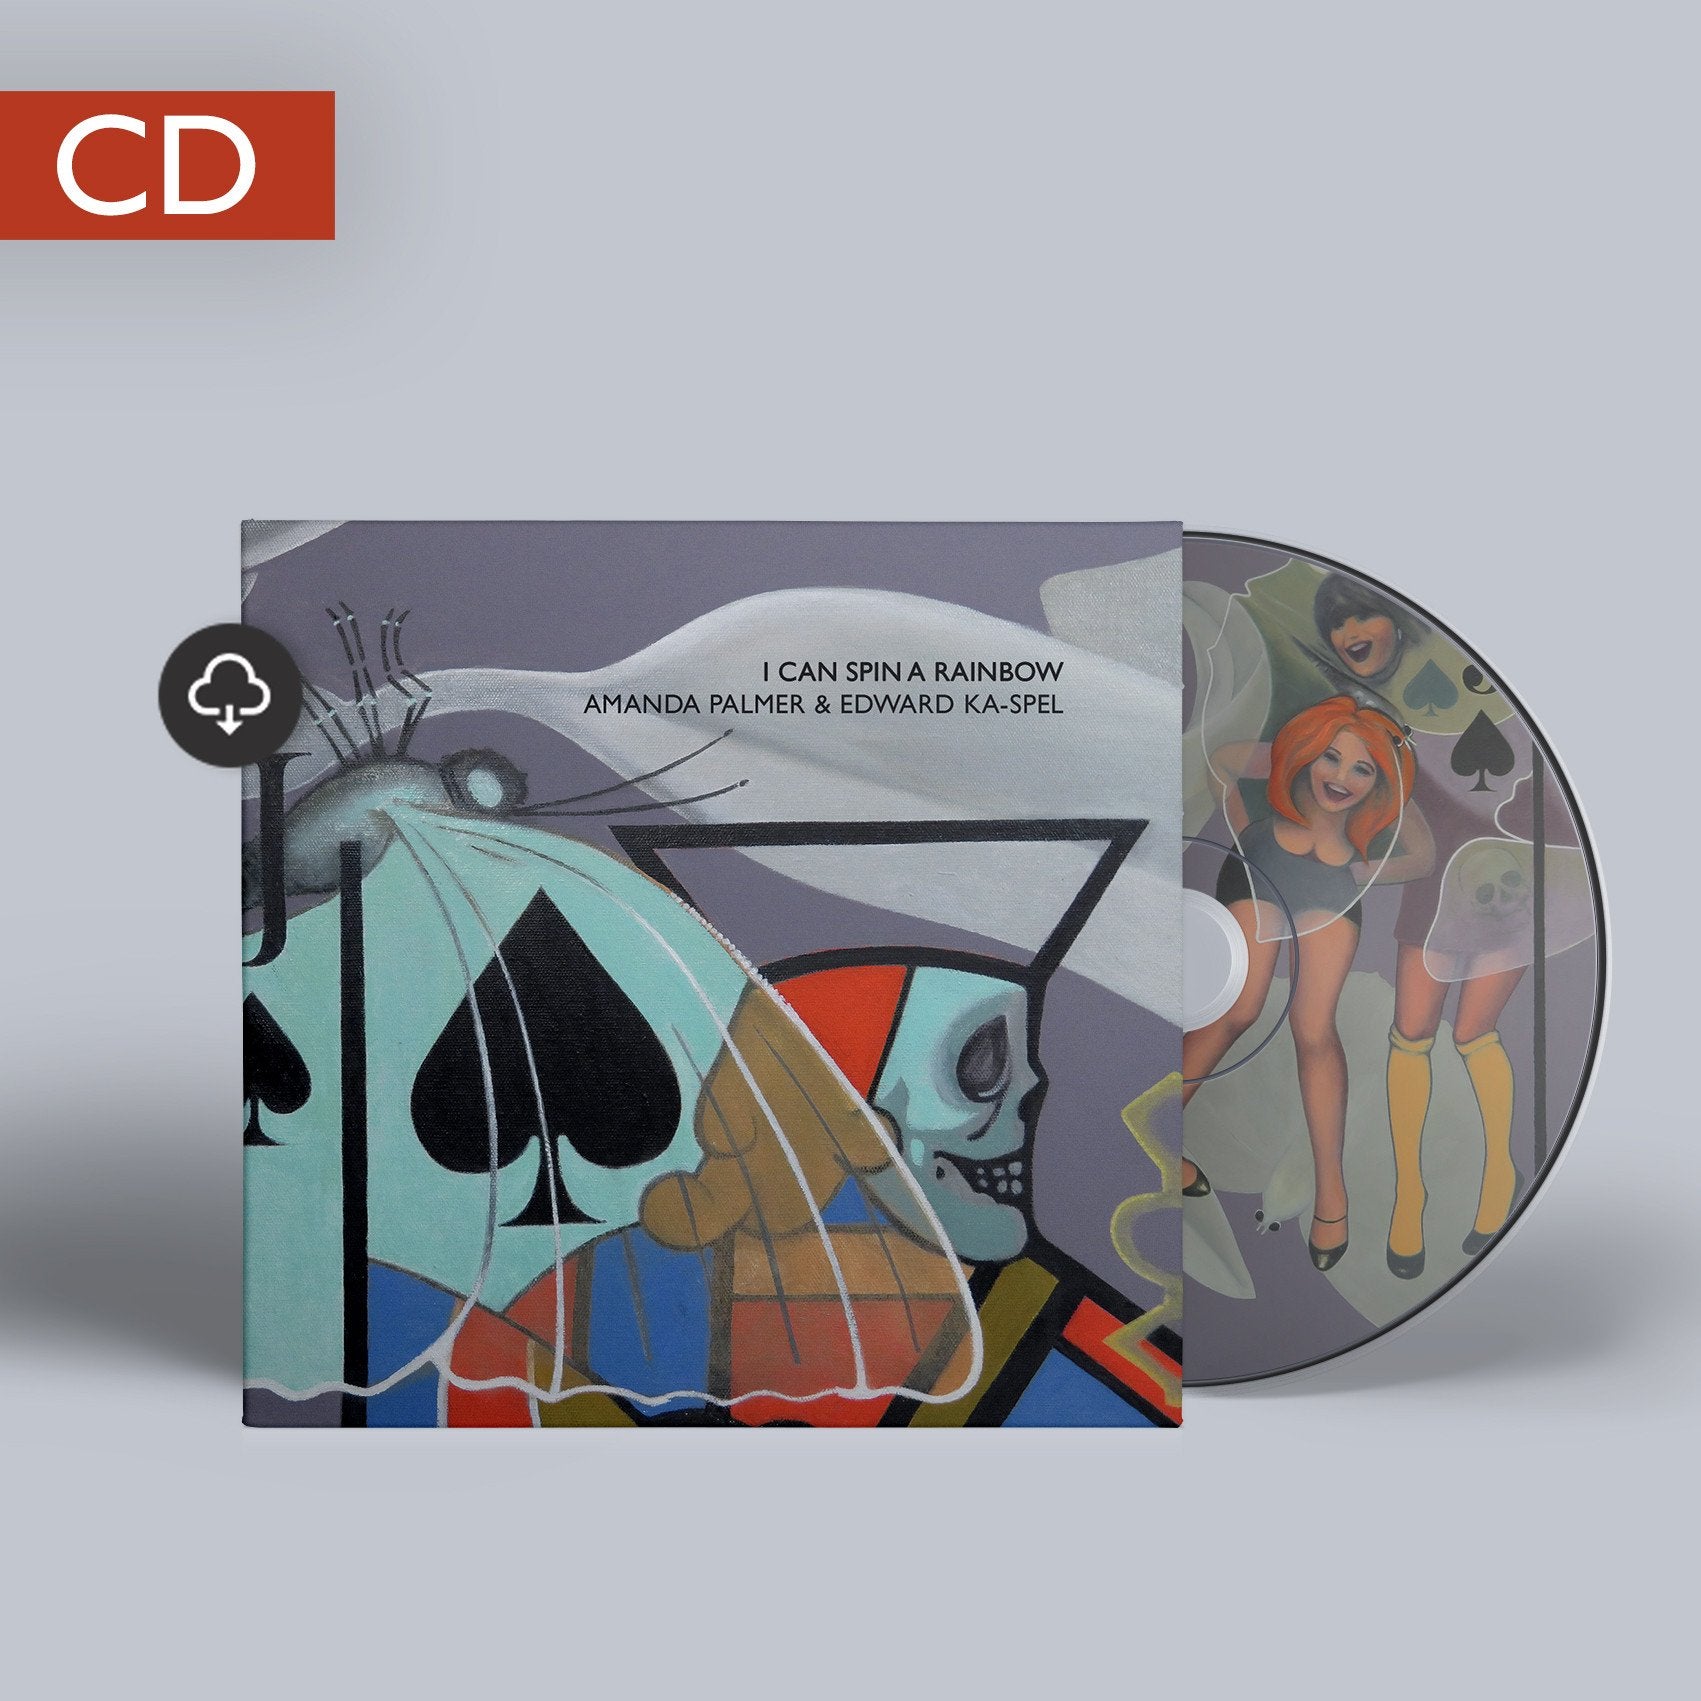 Amanda Palmer & Edward Ka-Spel - I Can Spin a Rainbow CD